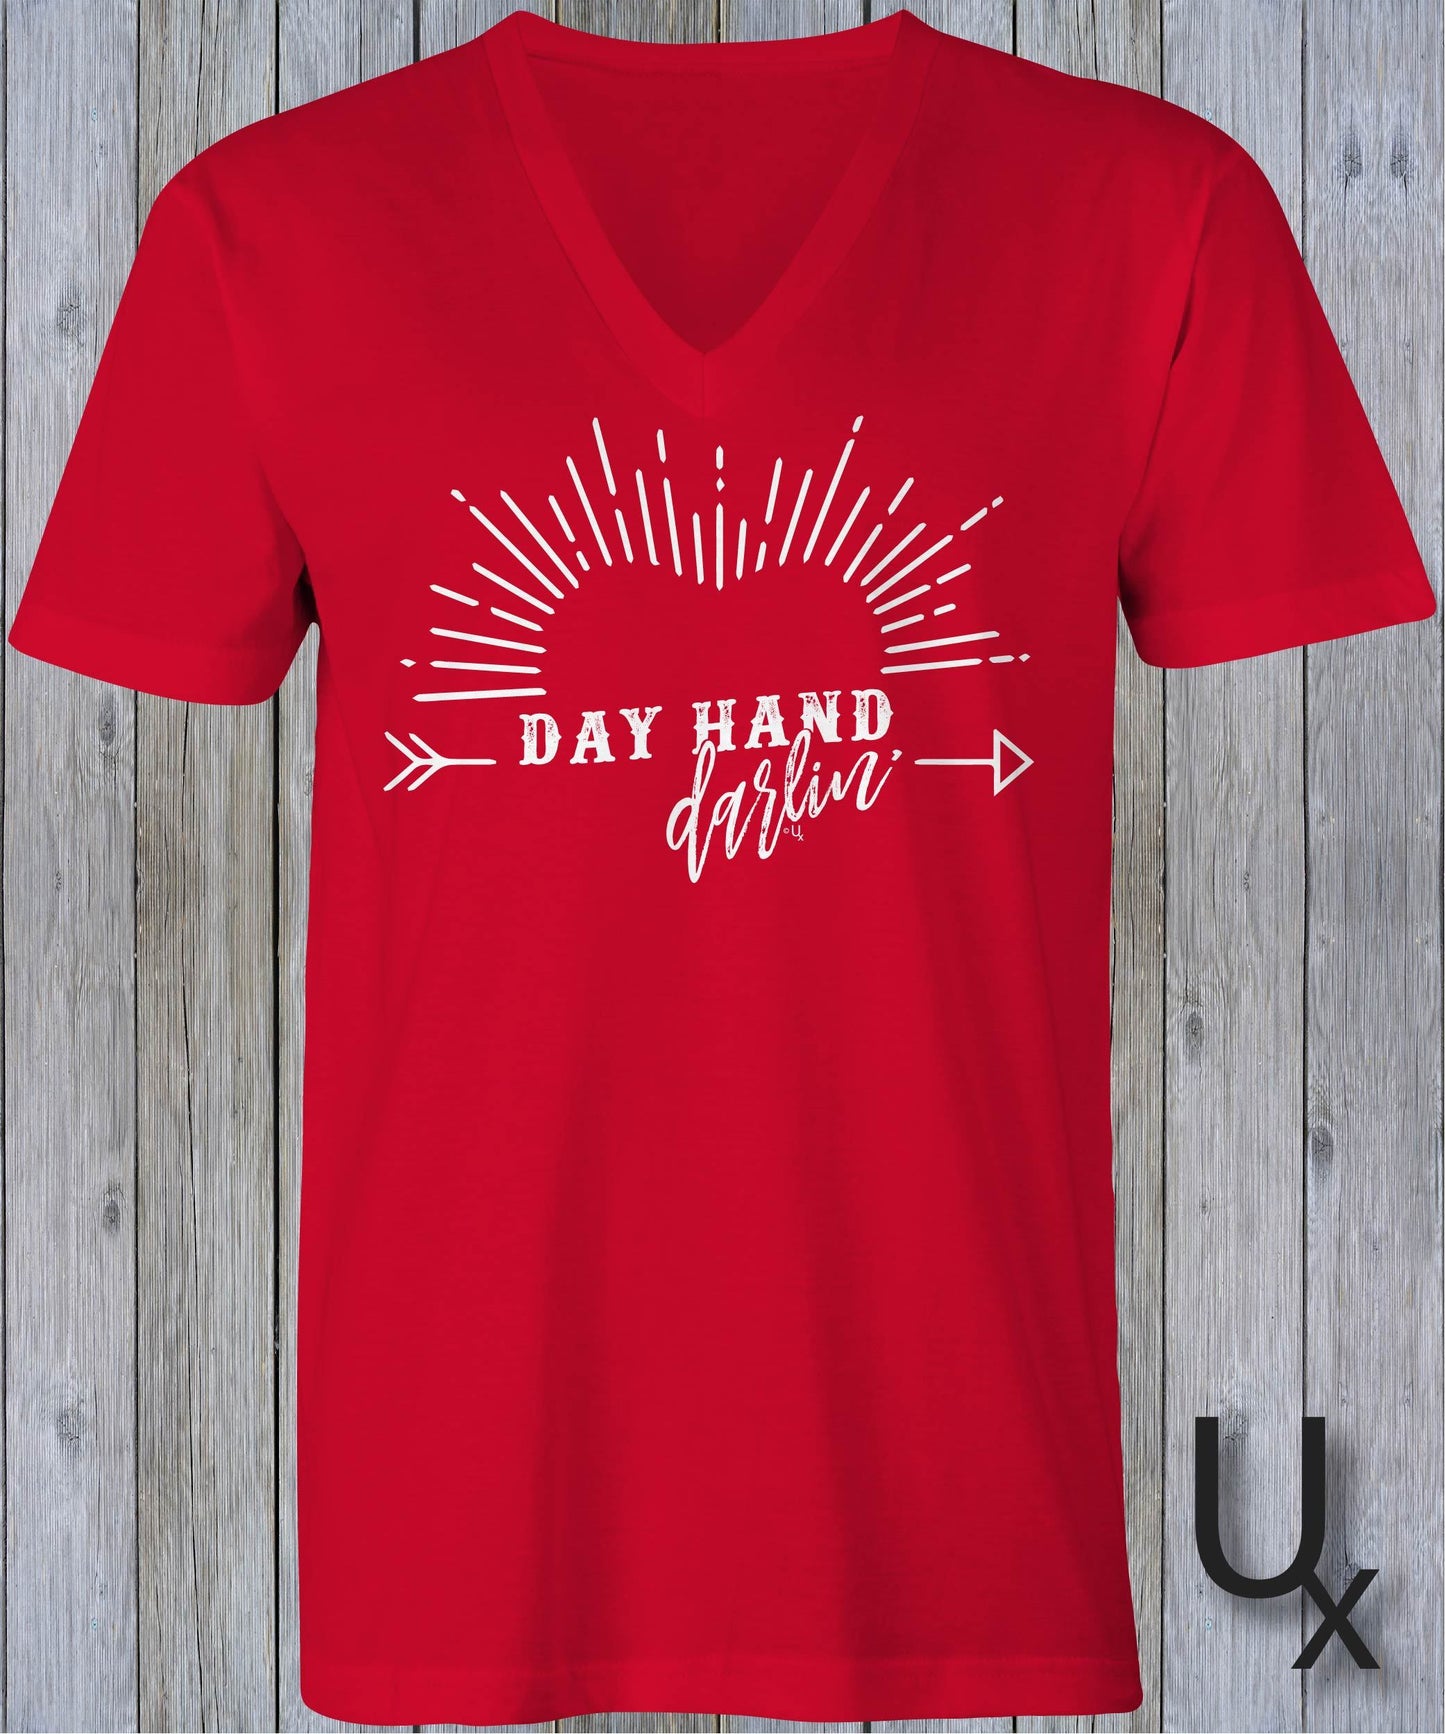 Day Hand Darlin tee - RED